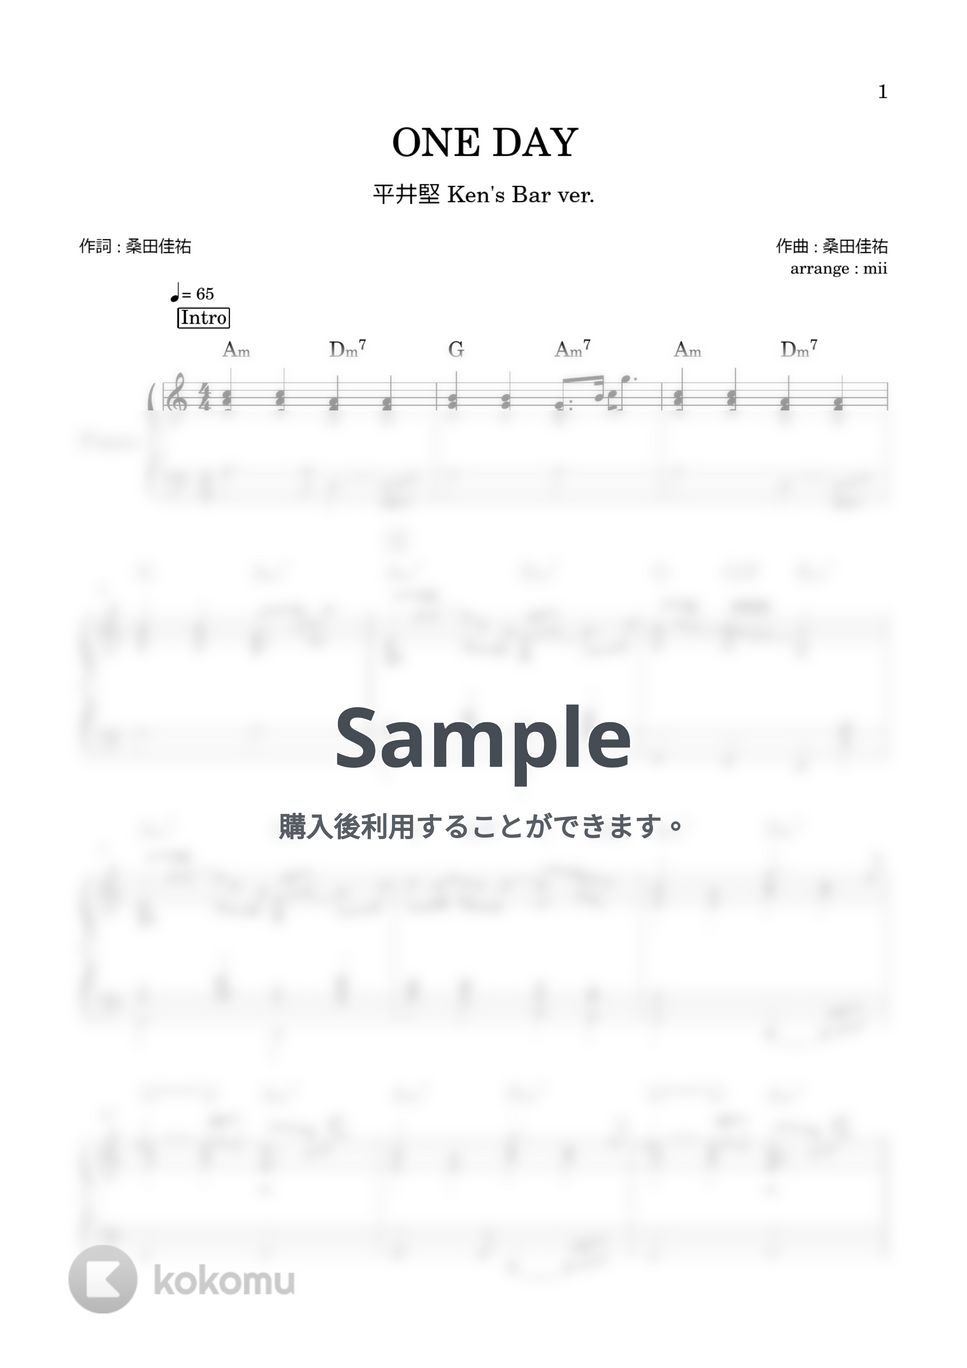 KUWATA BAND(桑田佳祐) - ONE DAY by miiの楽譜棚